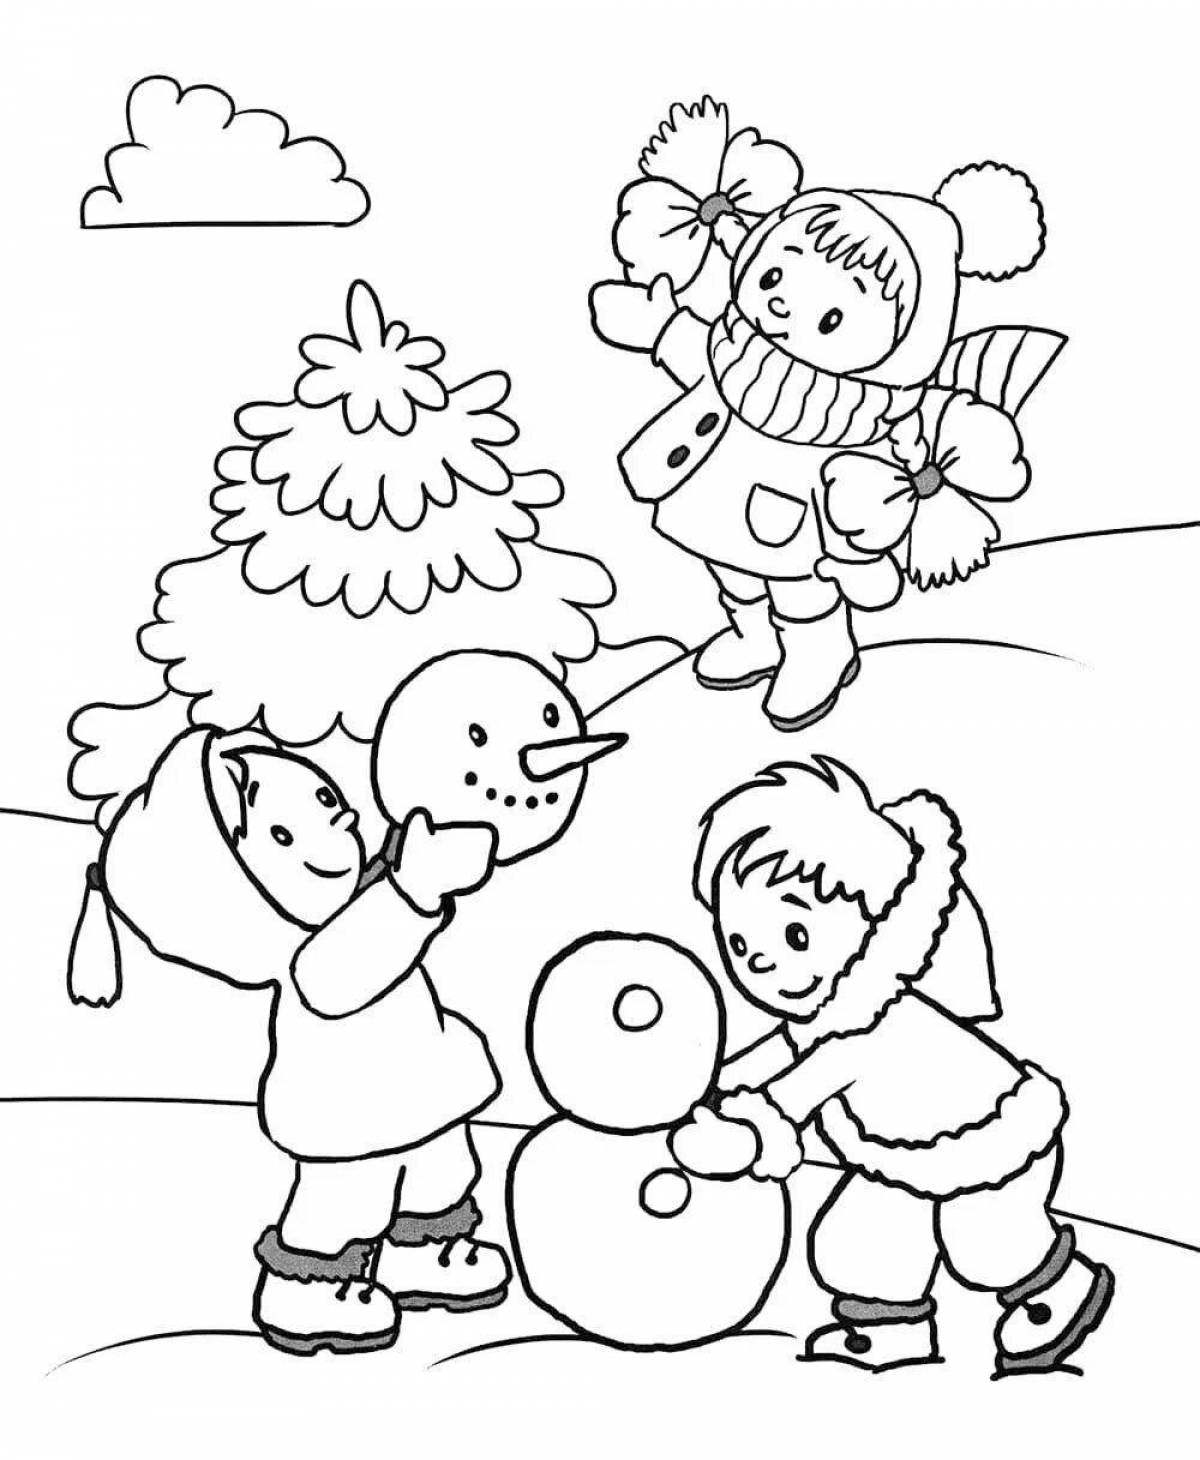 Exuberant Christmas coloring book for preschoolers